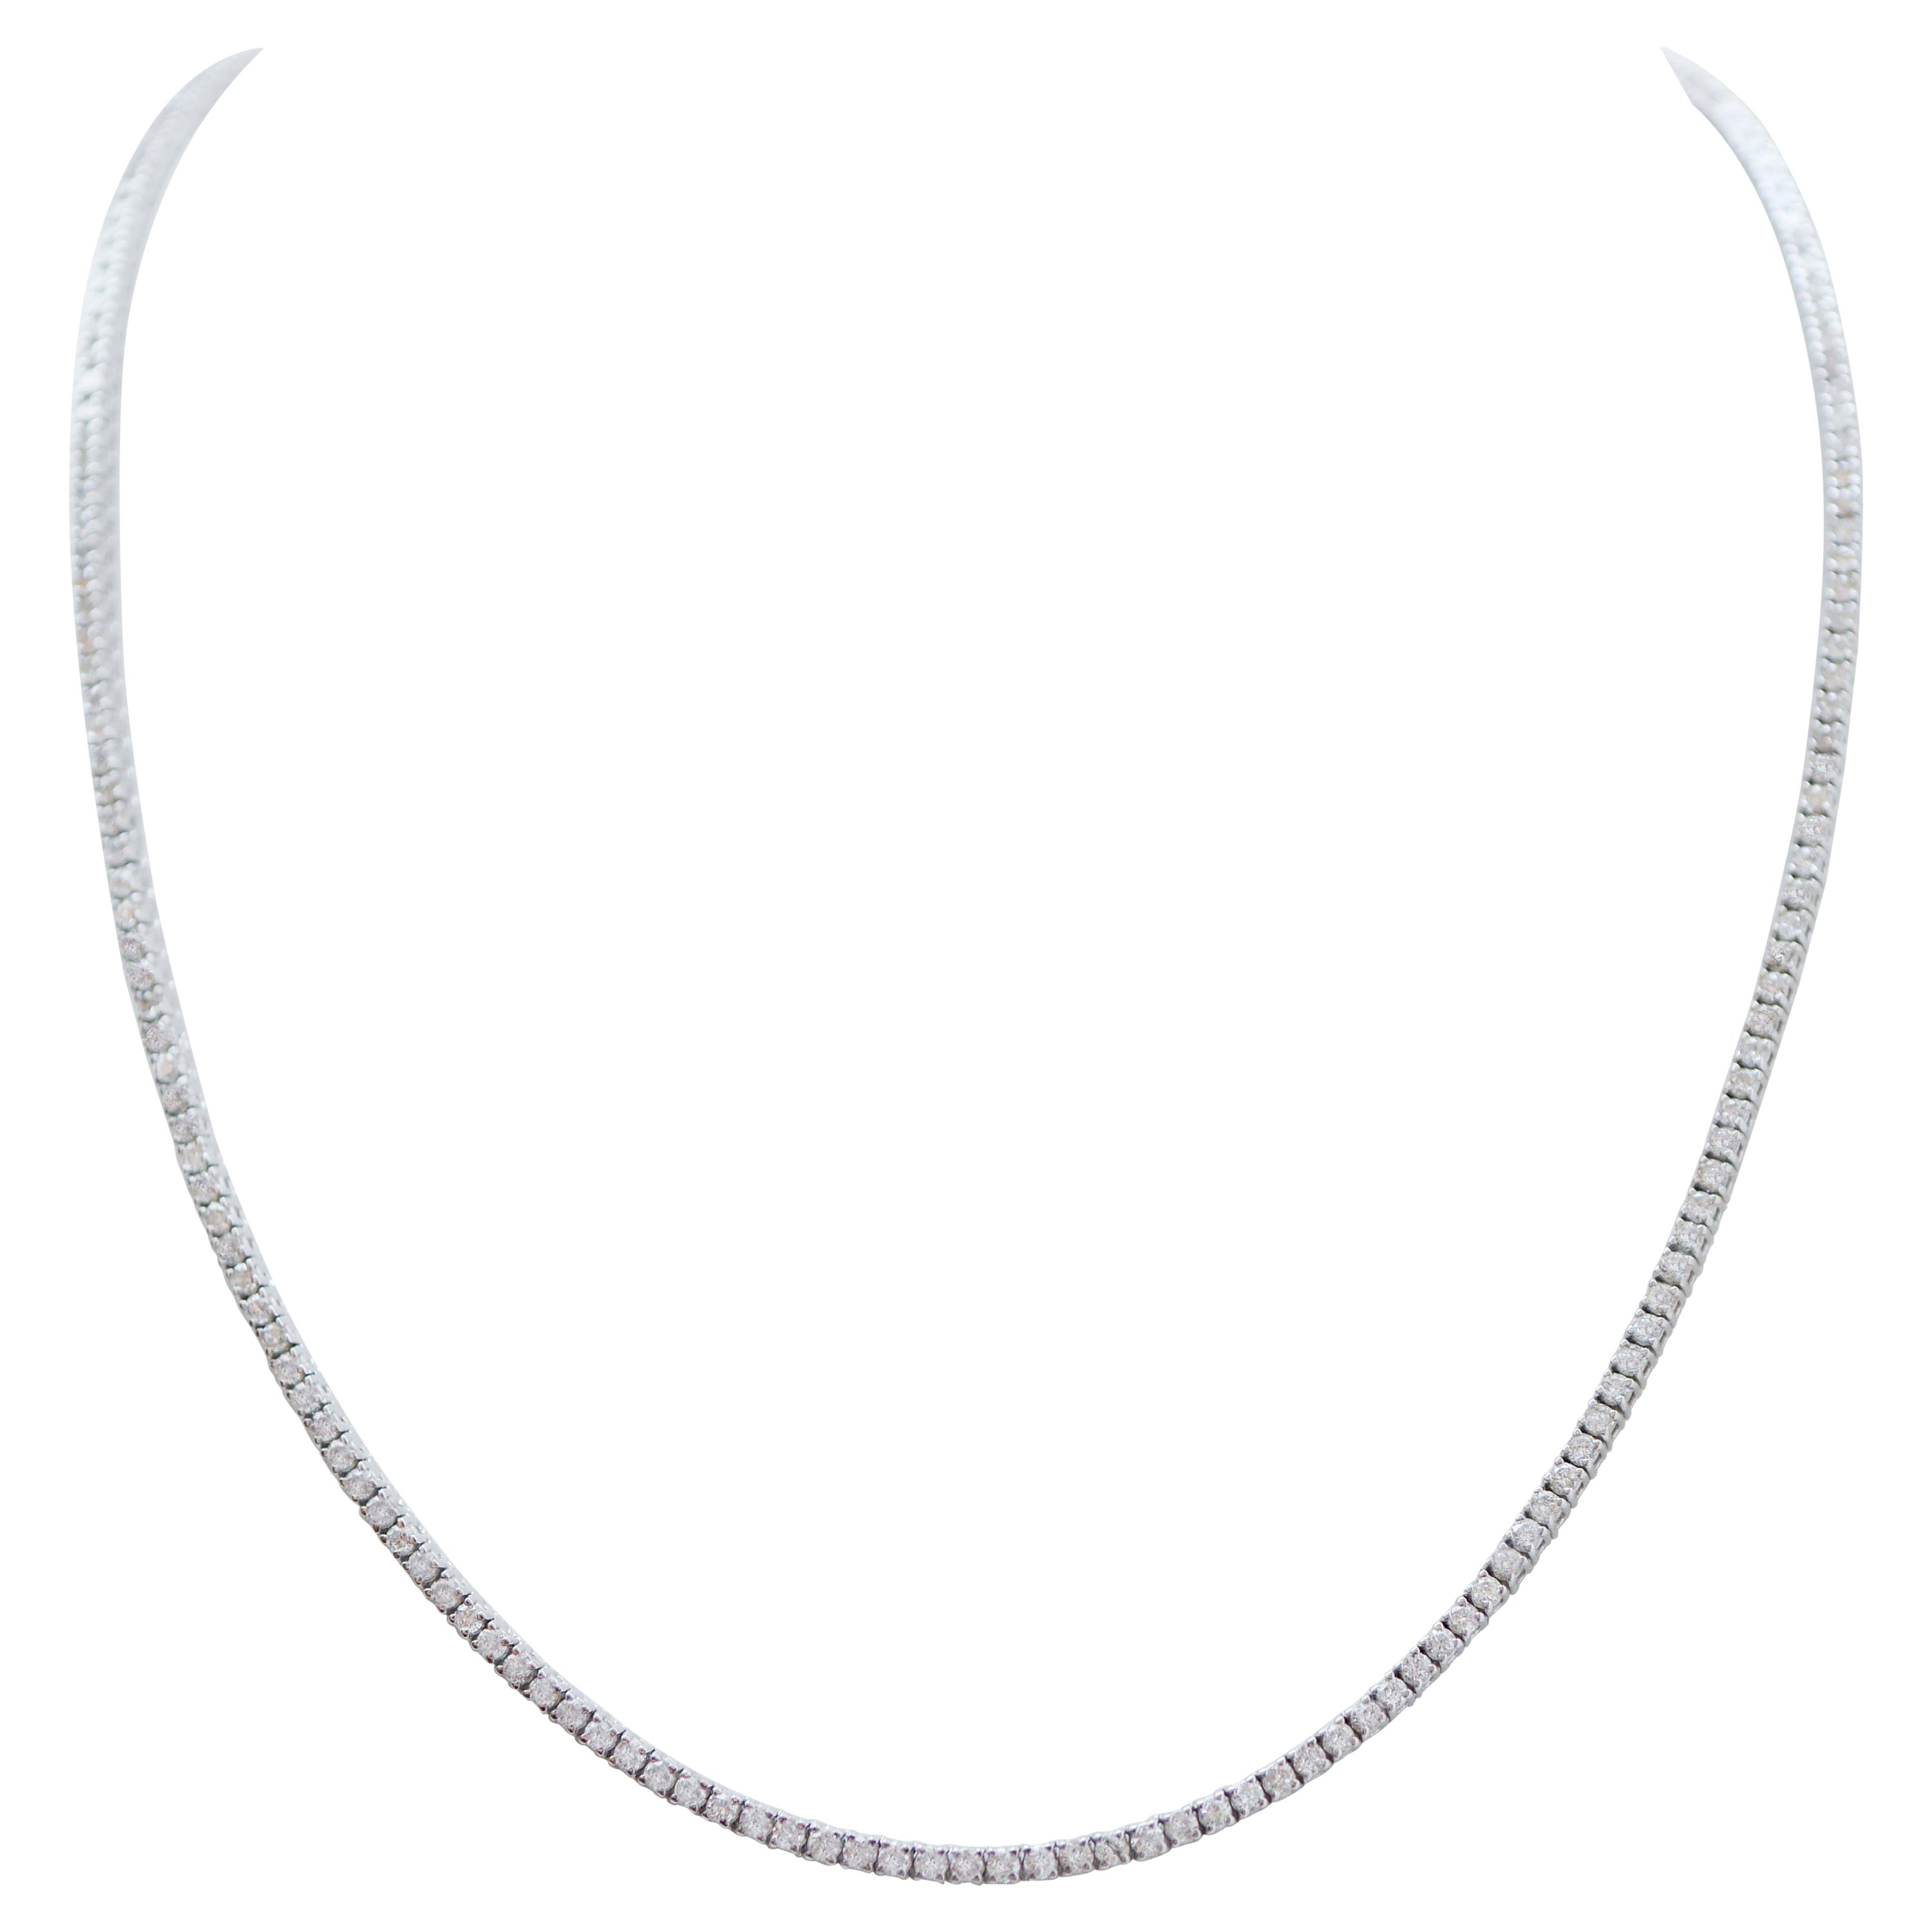 5.68 Carat Diamonds, 18 Karat White Gold Tennis Necklace.